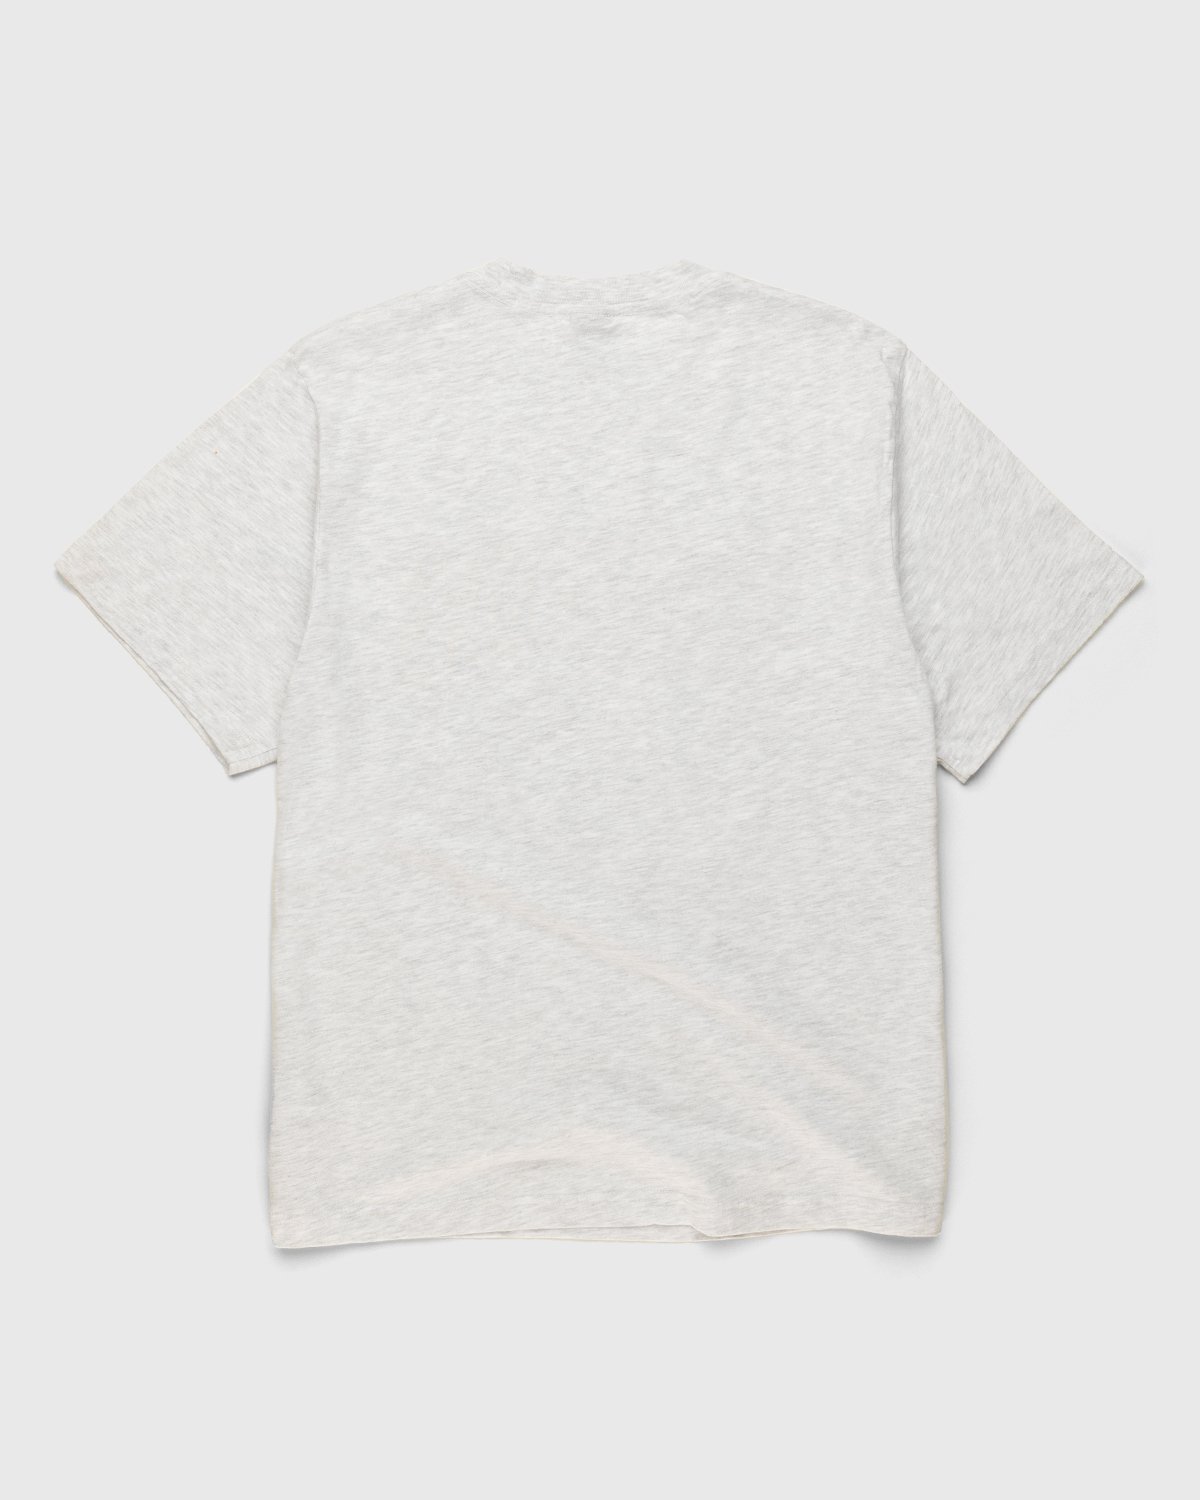 Noon Goons - Var City T-Shirt Grey - Clothing - White - Image 2